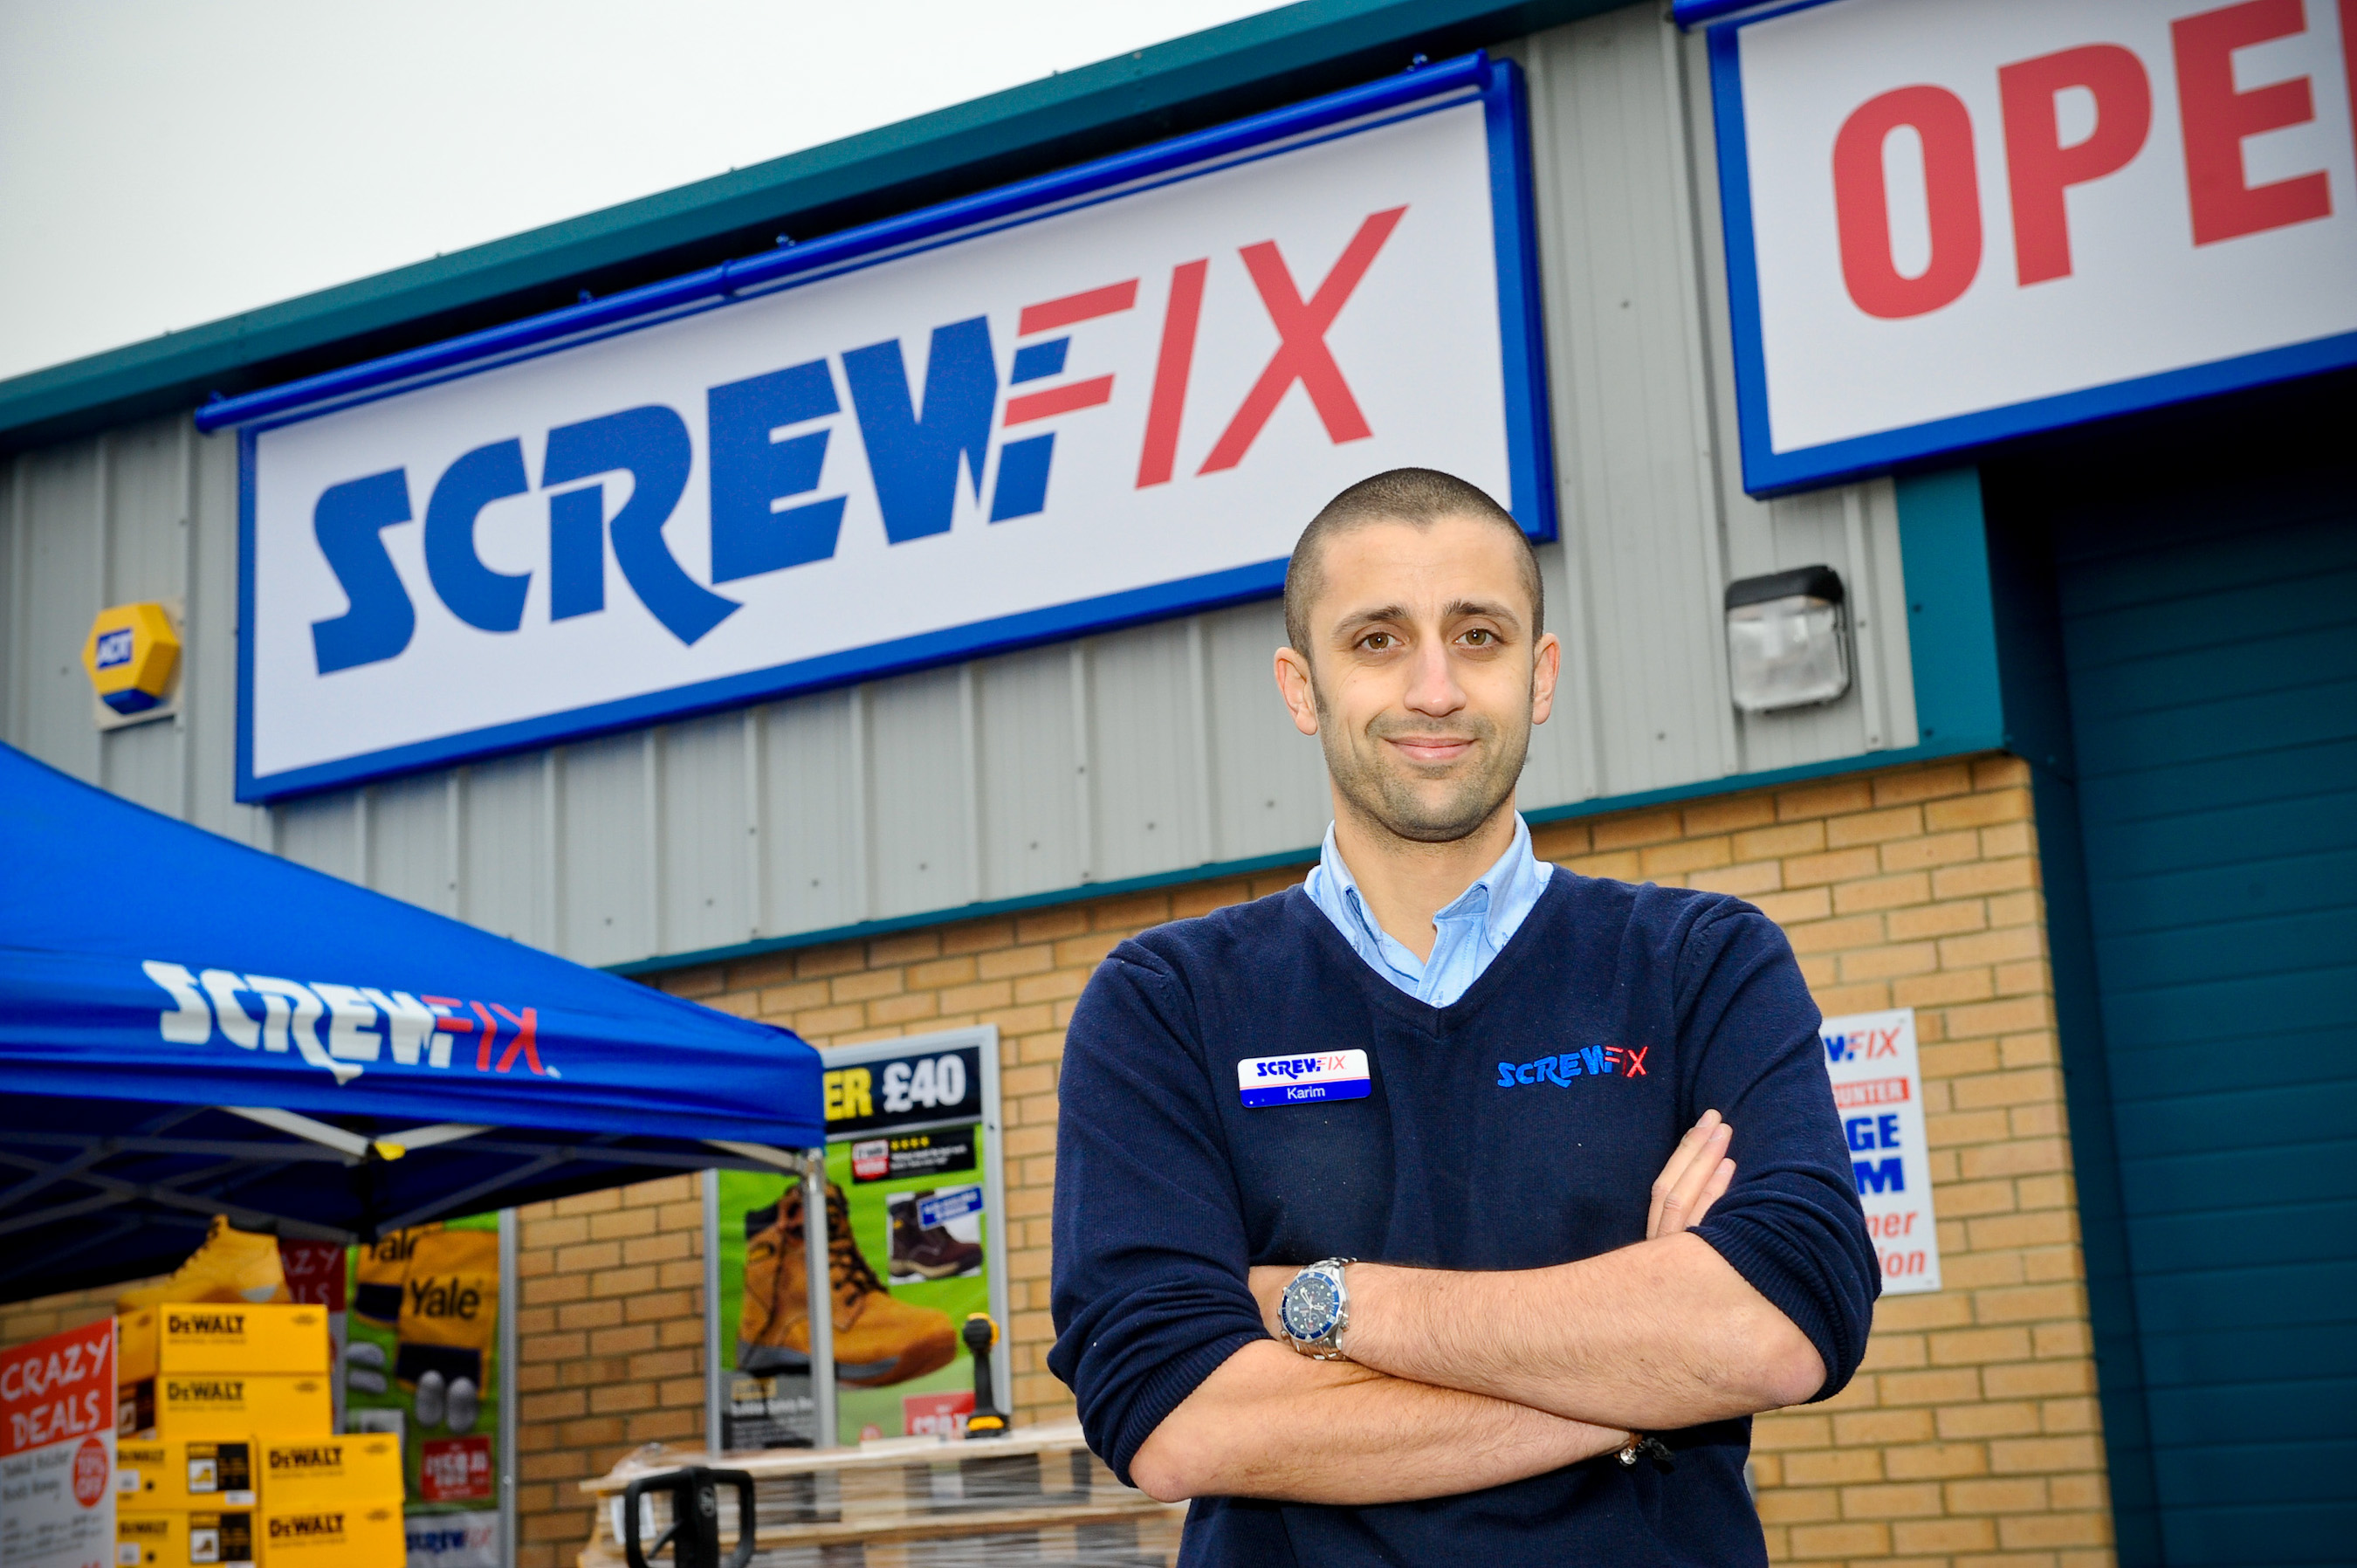 Durham’s first Screwfix store is declared a runaway success